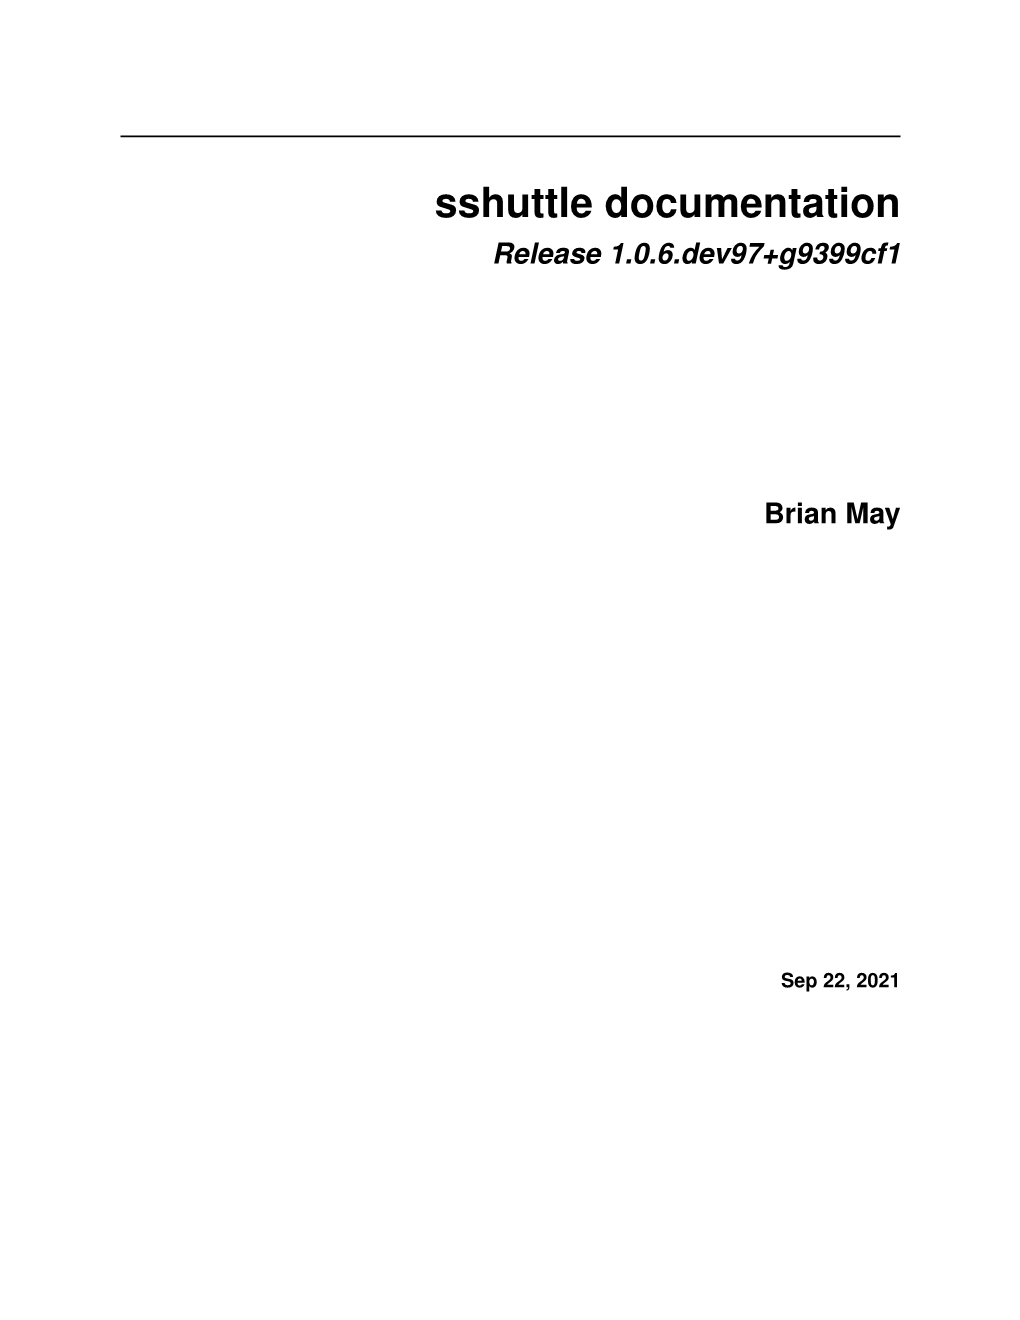 Sshuttle Documentation Release 1.0.6.Dev97+G9399cf1